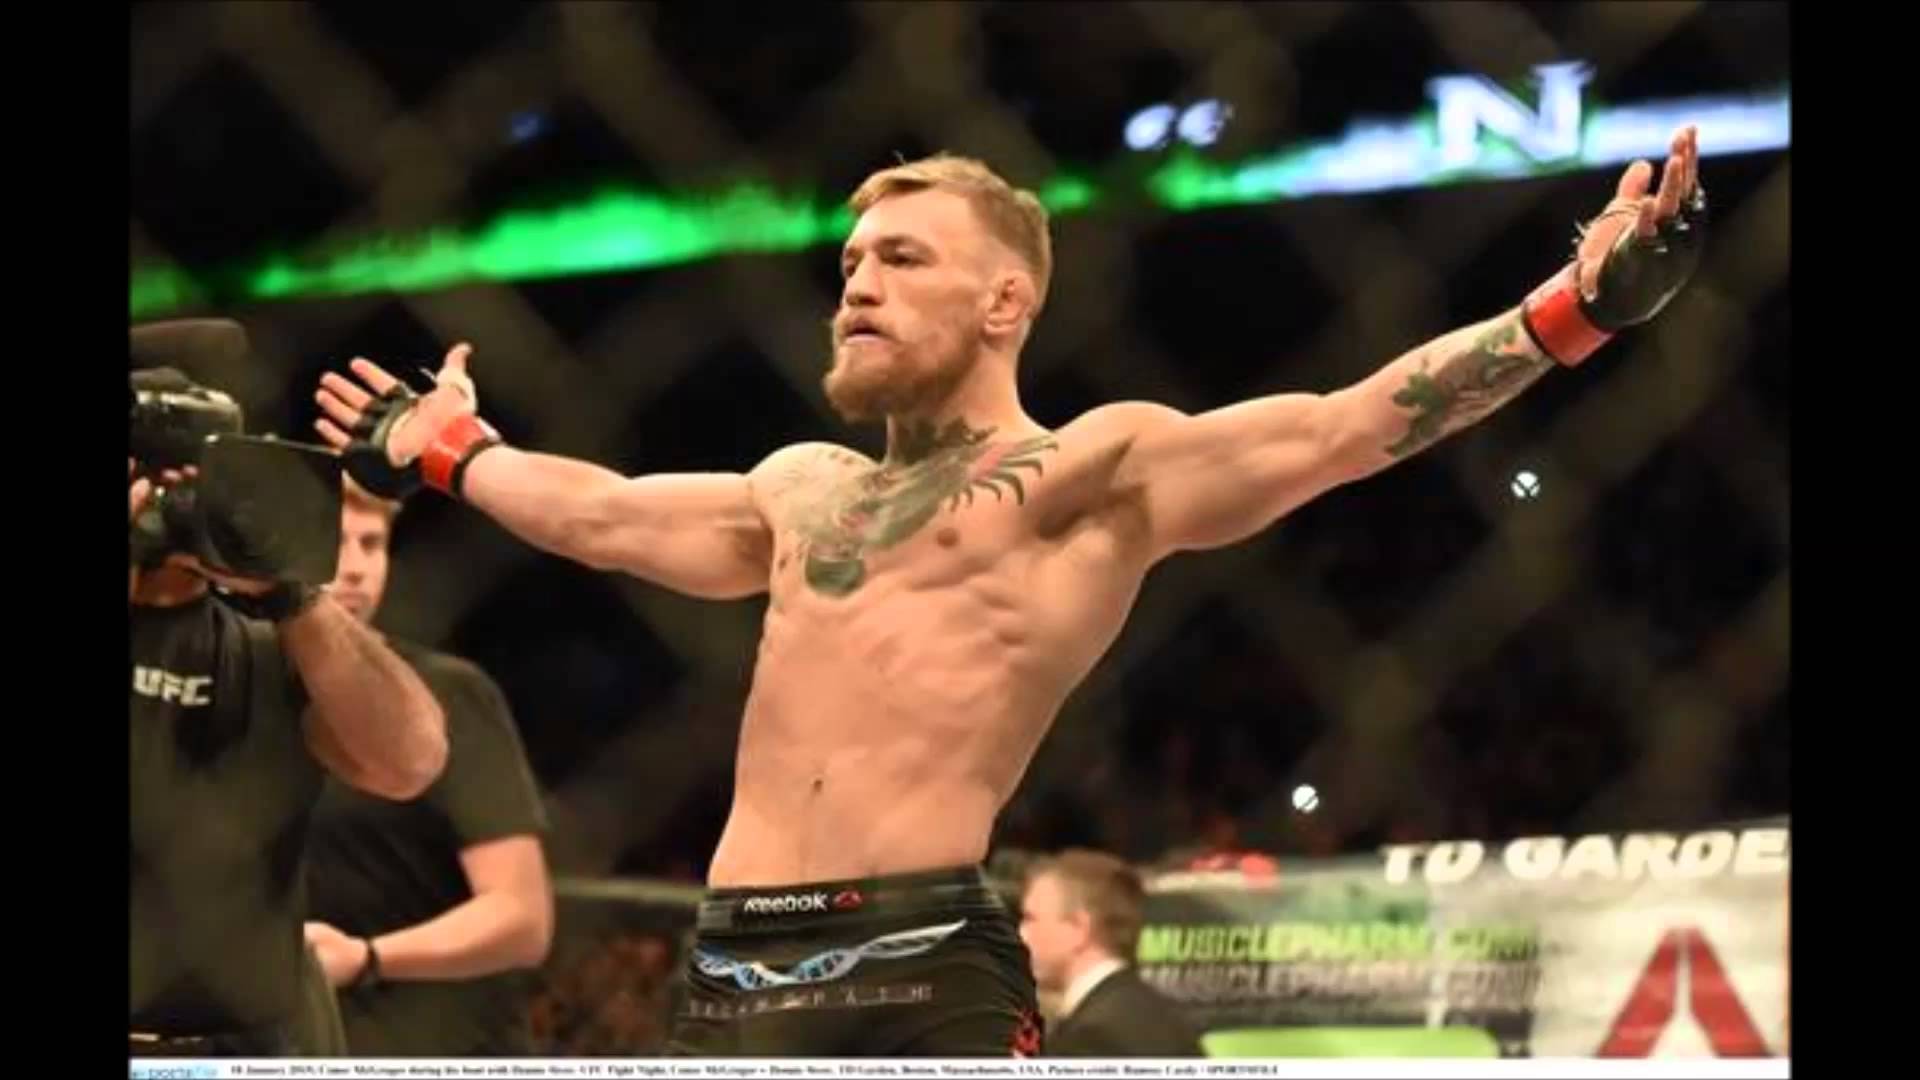 UFC Conor McGregor vs Chad Mendes fight results